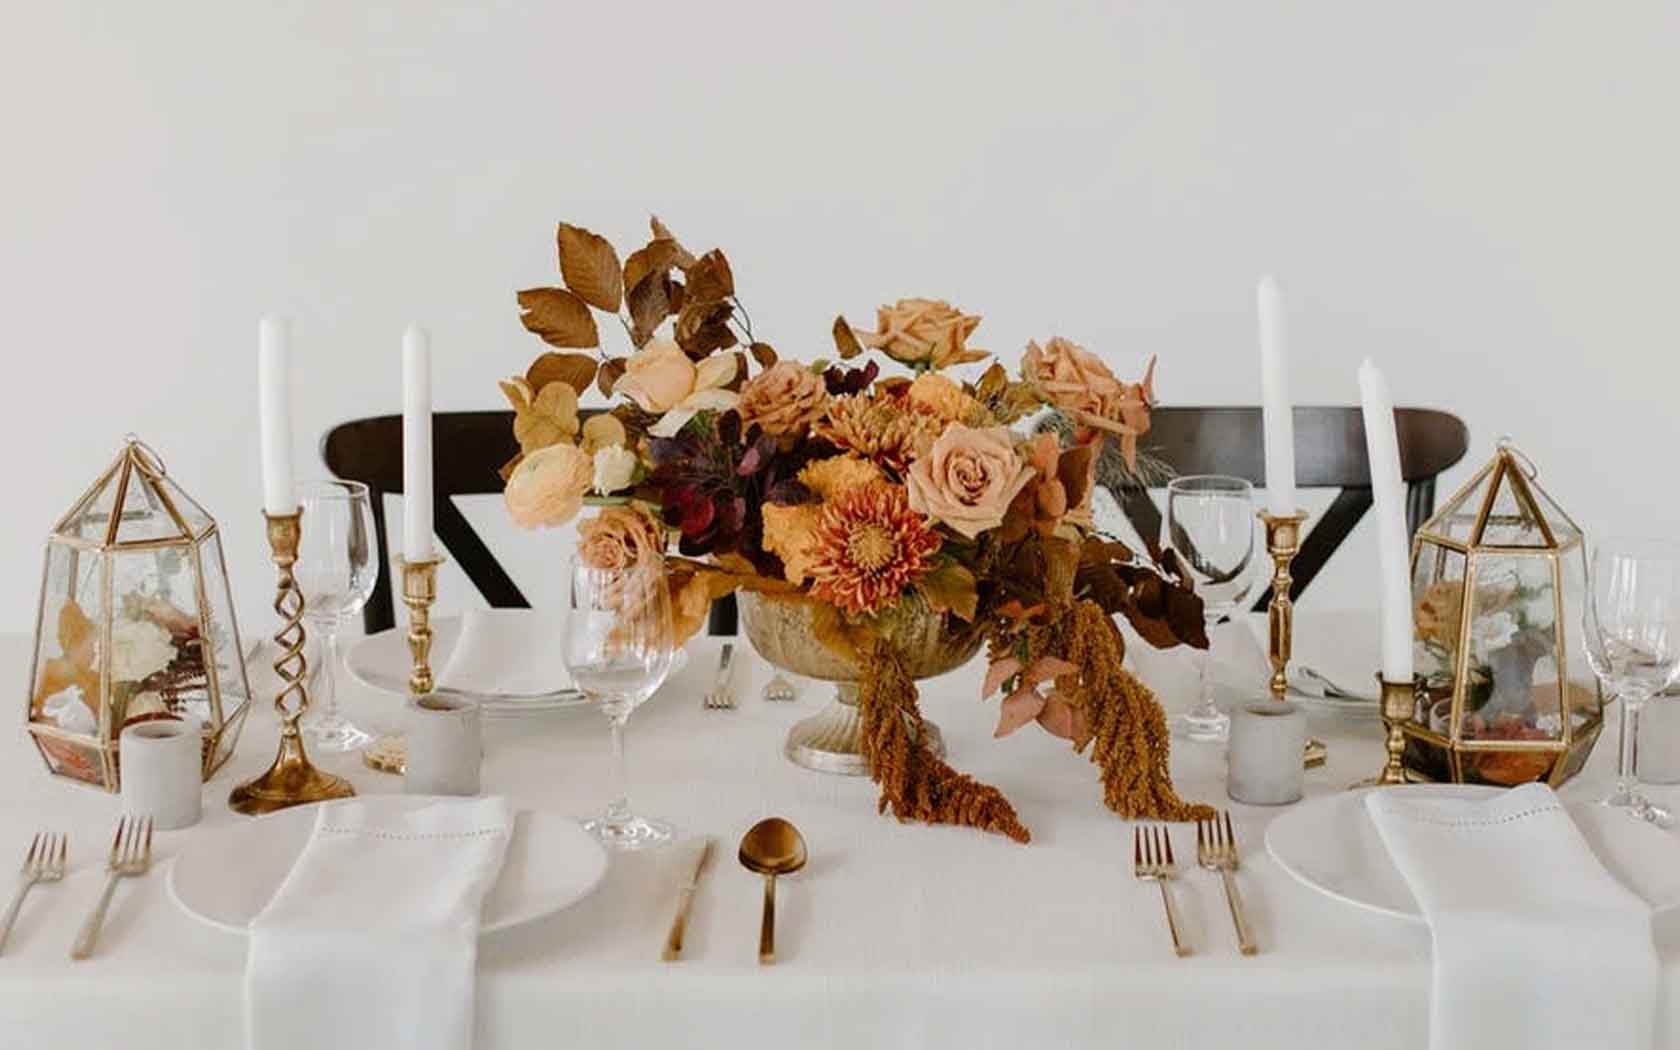 46 Fall Wedding Ideas to Help Plan the Perfect Autumnal Wedding